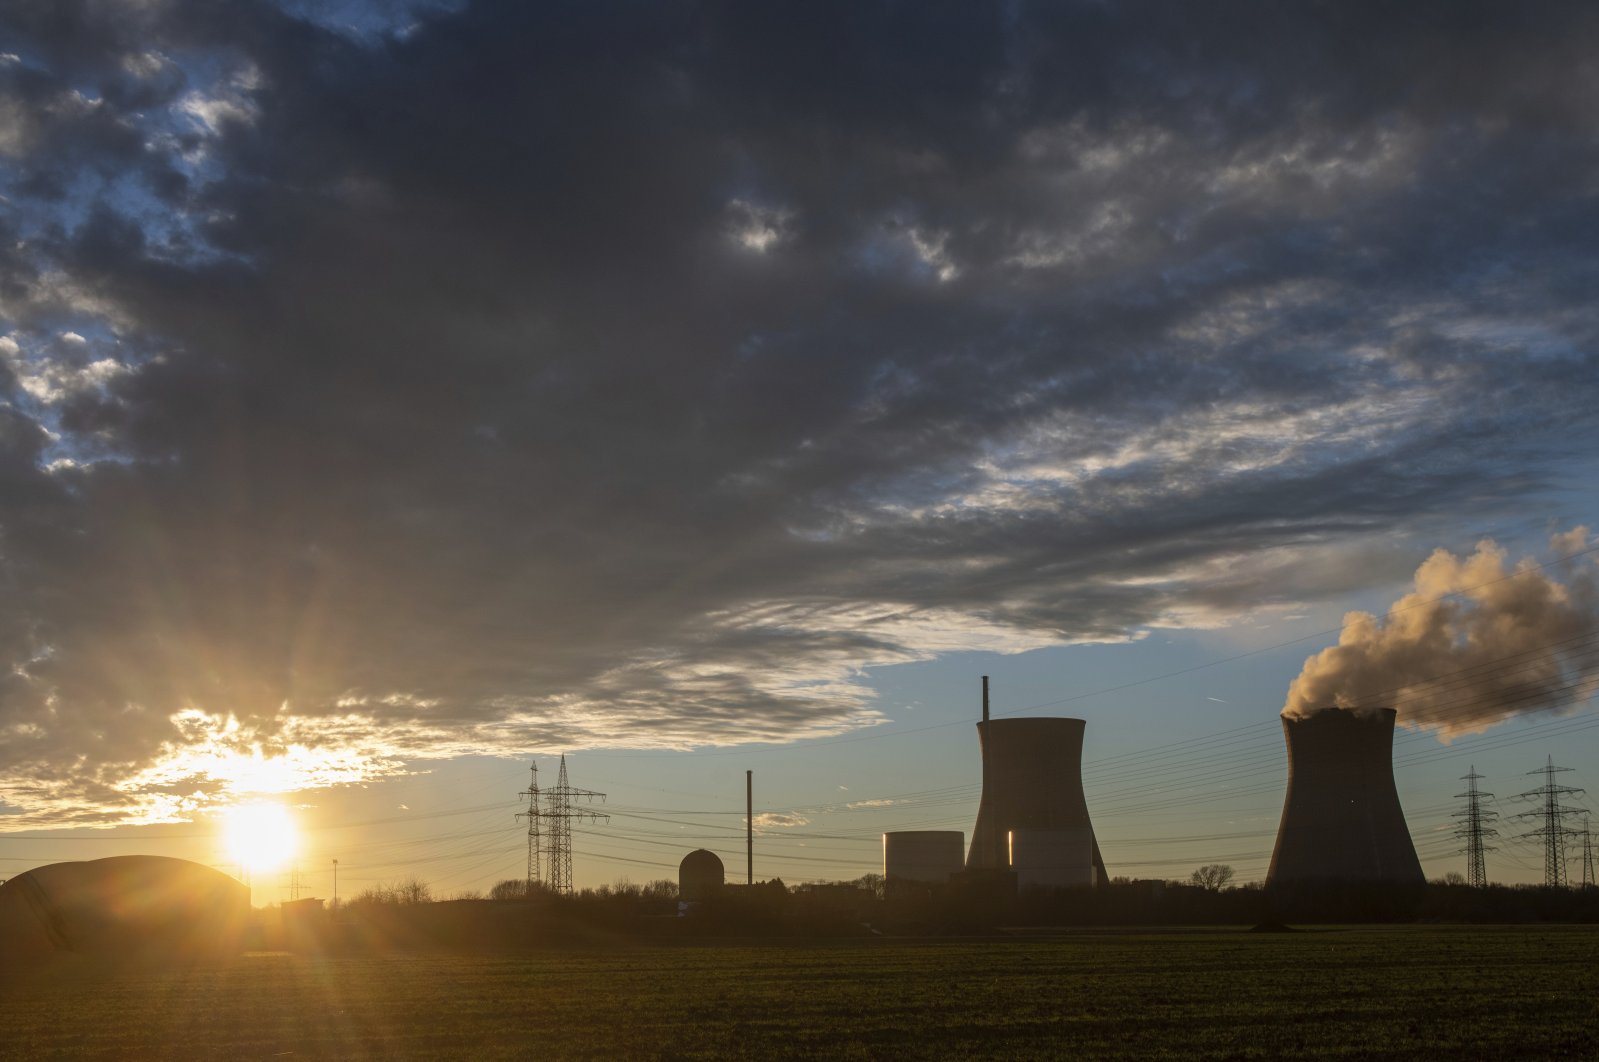 Jerman menyambut baik rencana investasi hijau Uni Eropa untuk gas, menolak nuklir